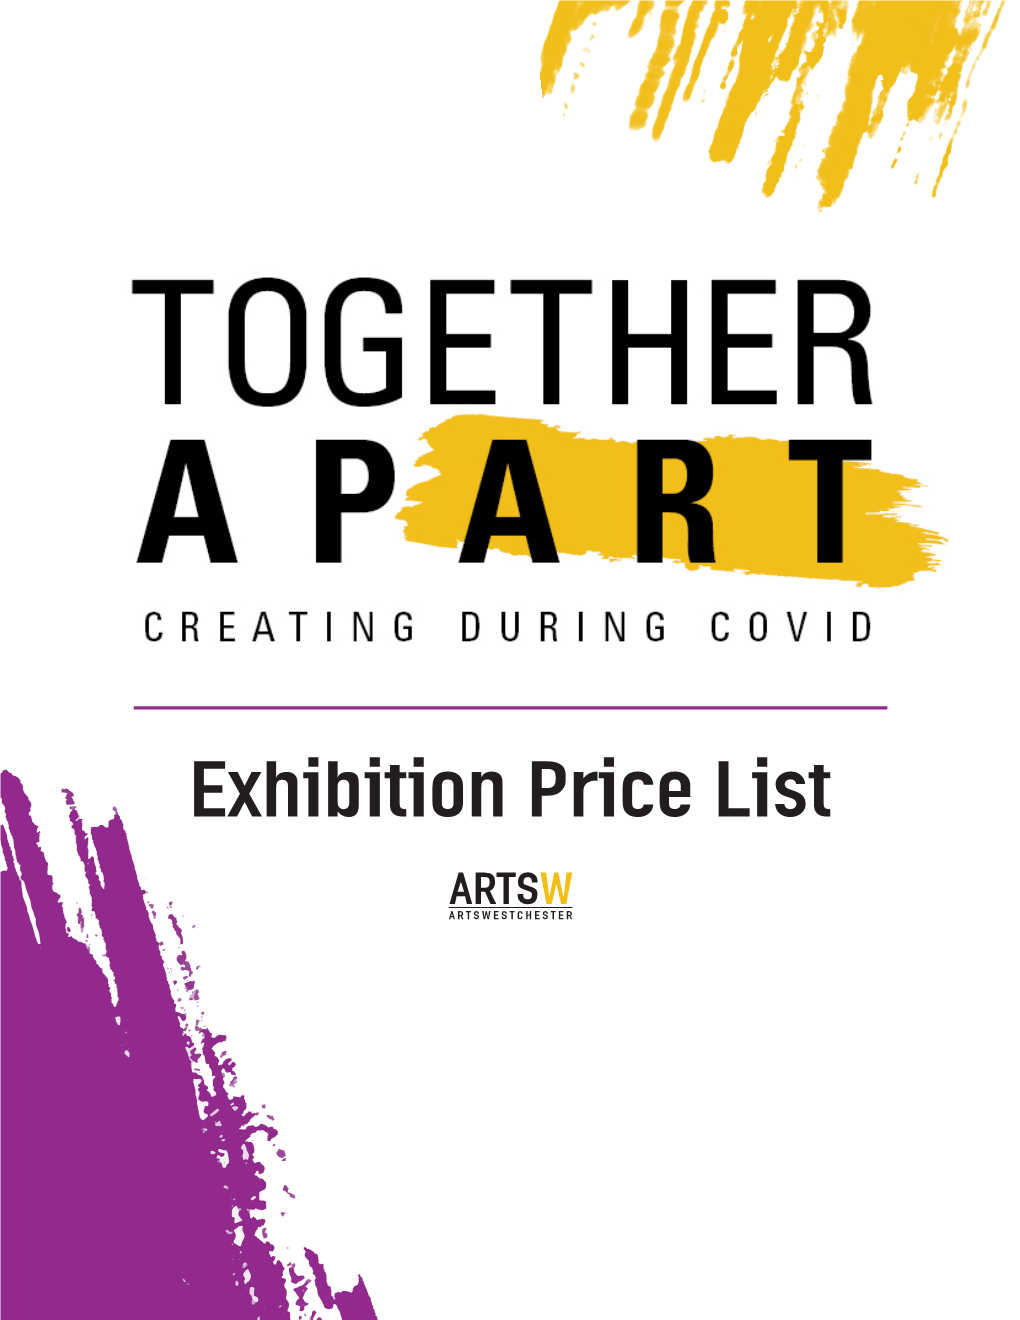 Together Apart Exhibition Price List.Docx